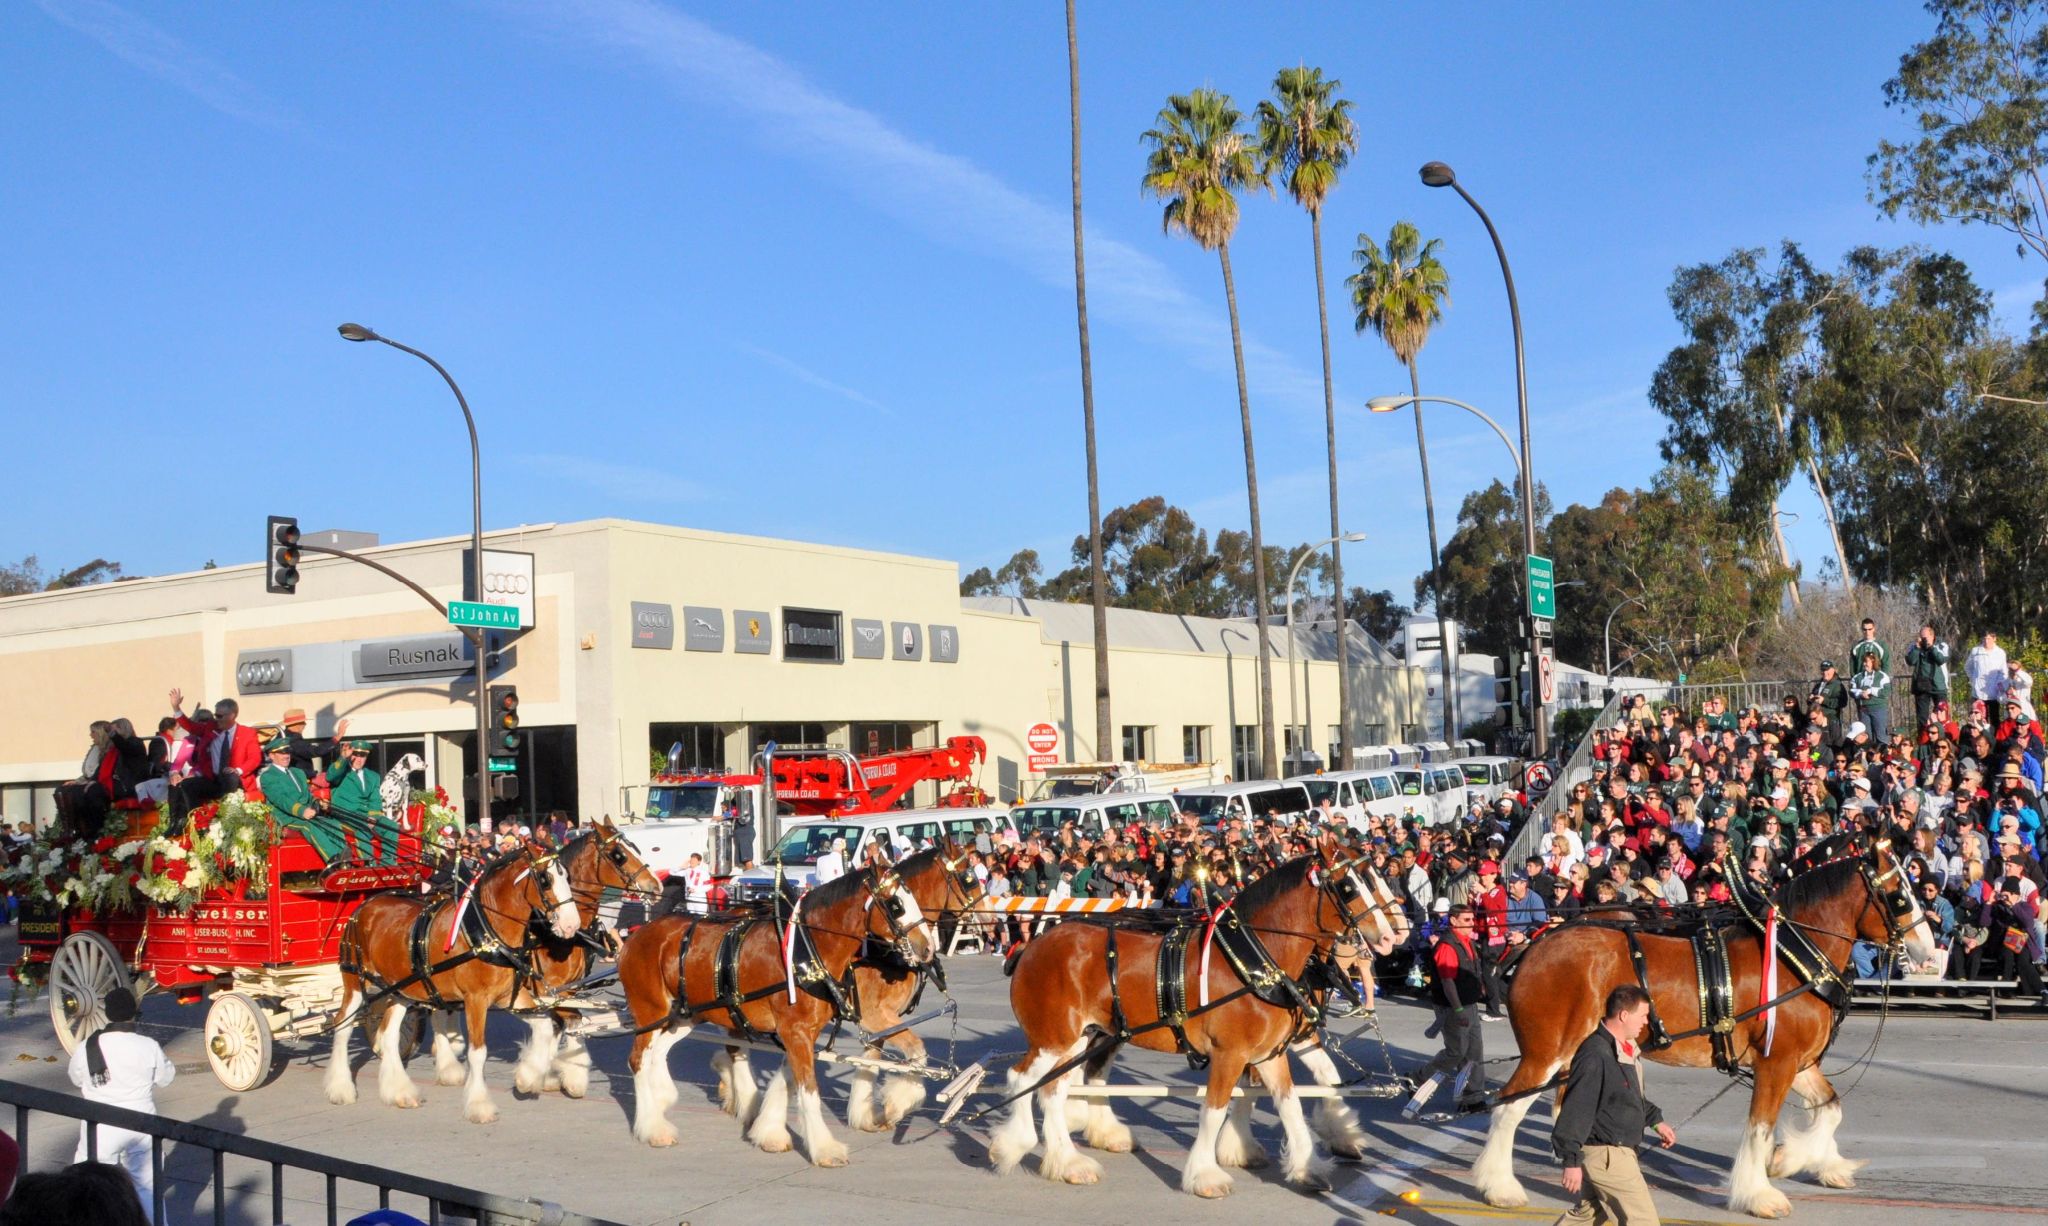 Budwiser Clydesdales and Carriage, Tournament of Roses Parade, Pasadena, CA - 2014-01-01